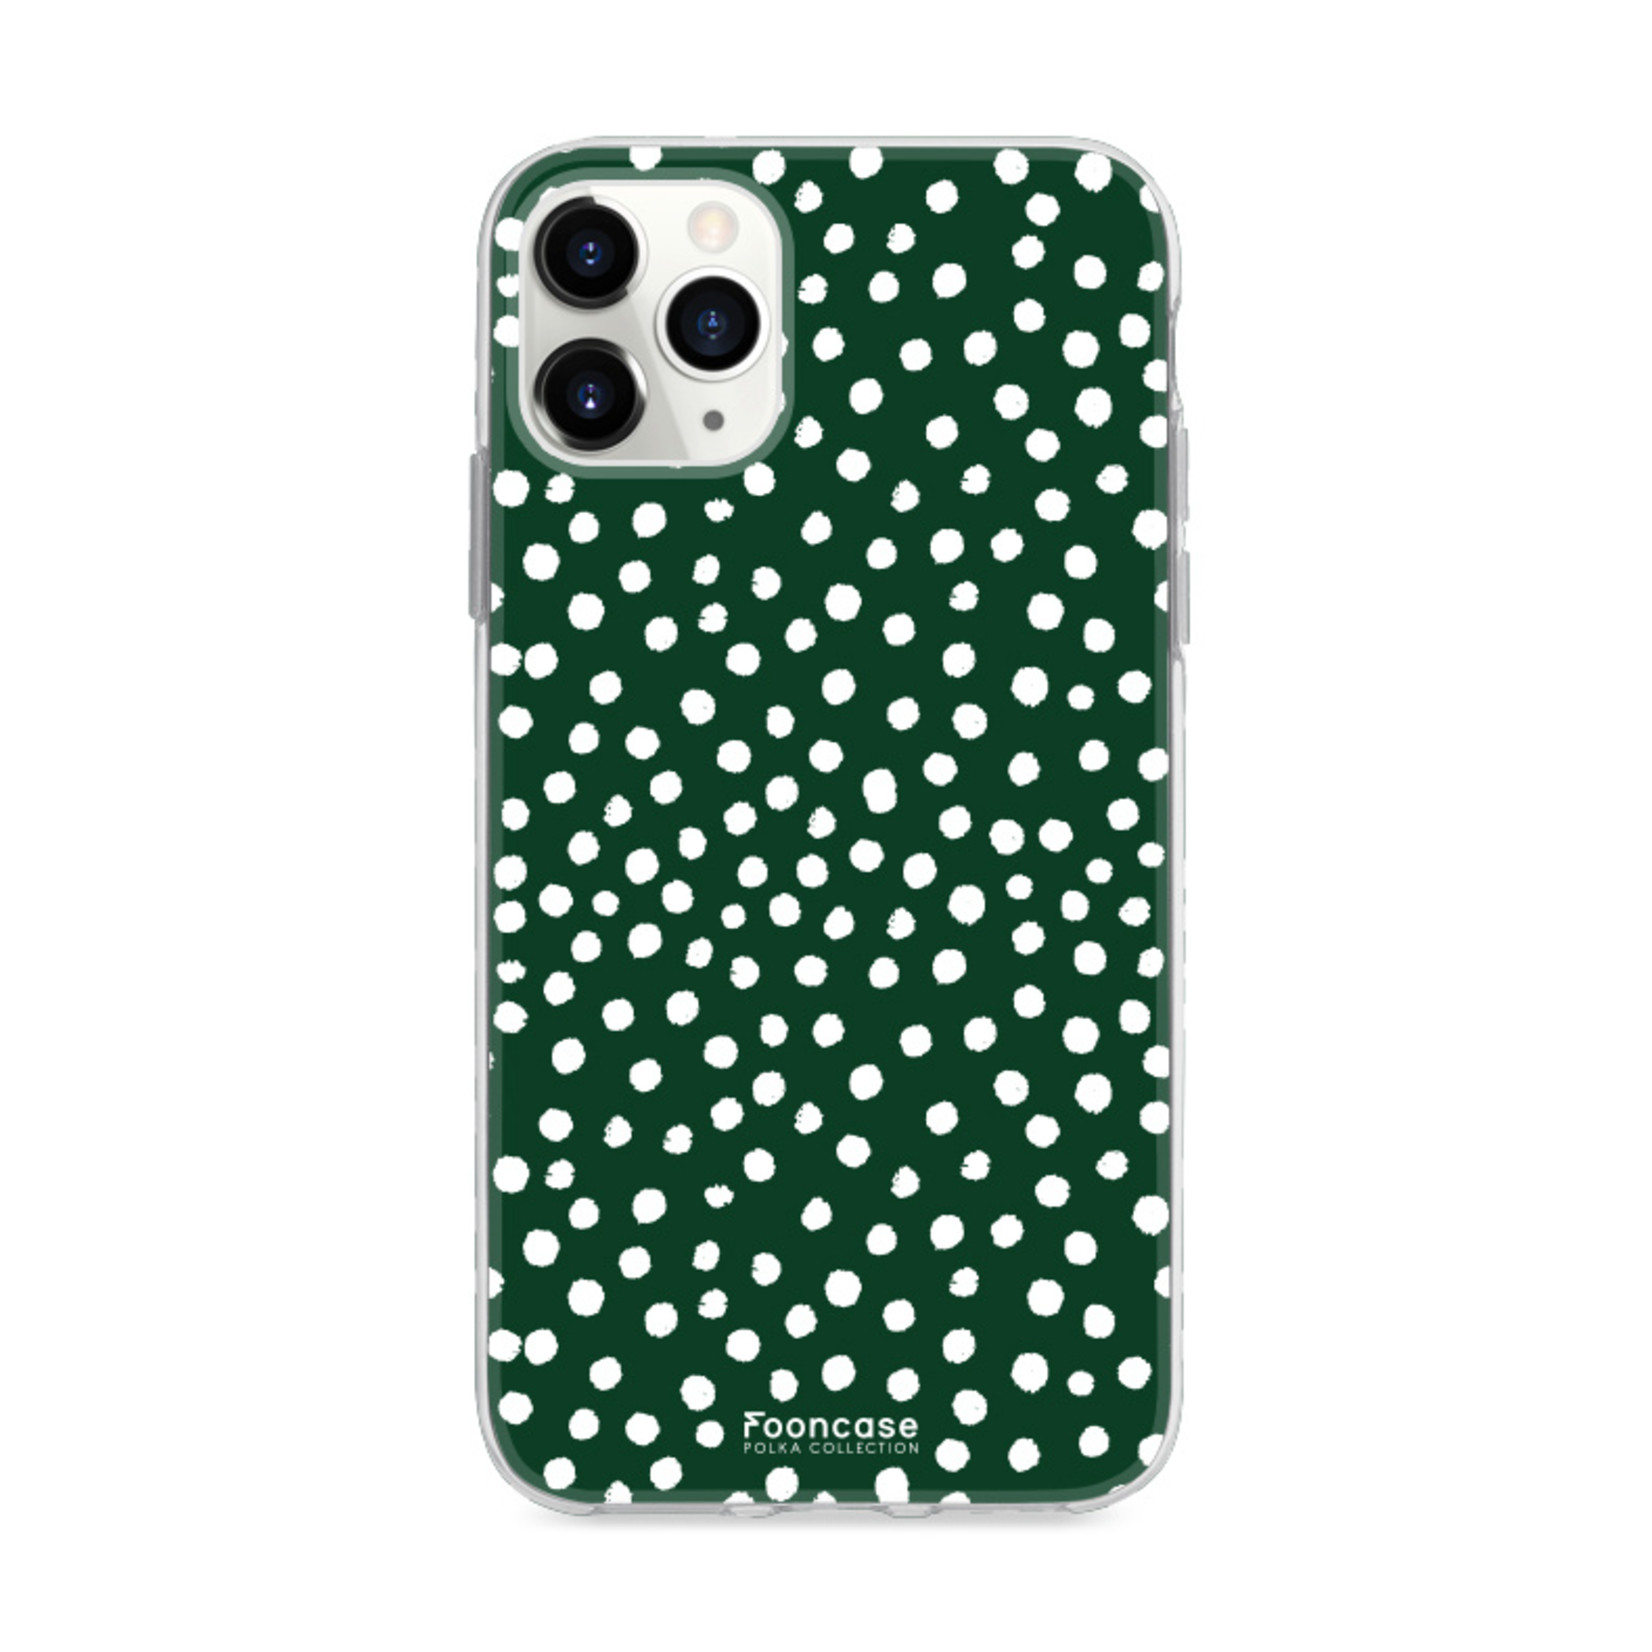 FOONCASE IPhone 11 Pro Max - POLKA COLLECTION / Dark green